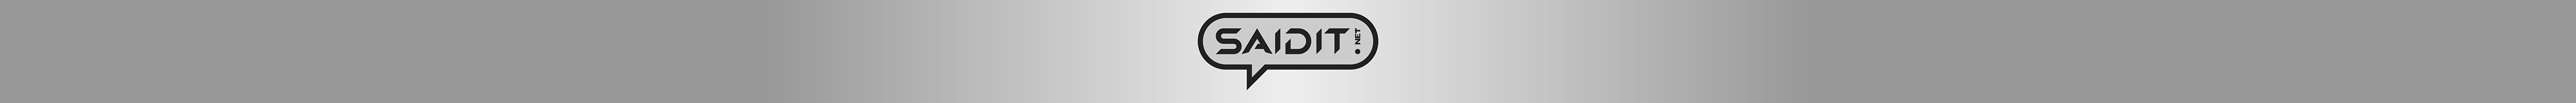 Image Saidit-2019-Centered-Grade-Day-Logo-5000x200